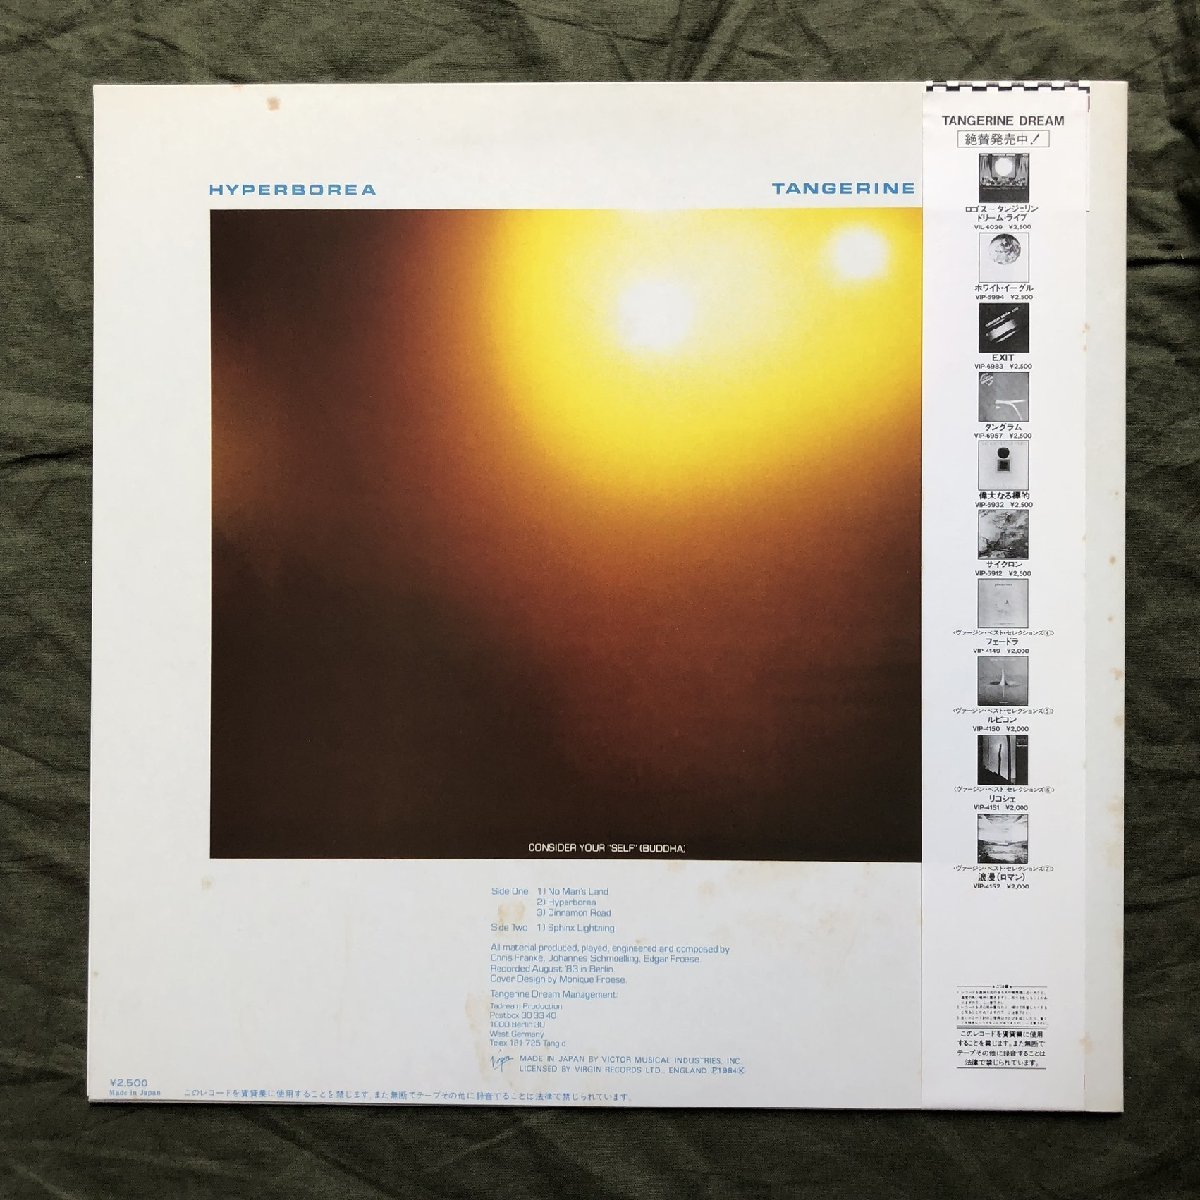  царапина нет прекрасный запись очень редкий 1984 год язык je Lynn * Dream Tangerine Dream LP запись . вода. поэзия Hyperborea с лентой Techno электро Edgar Froese